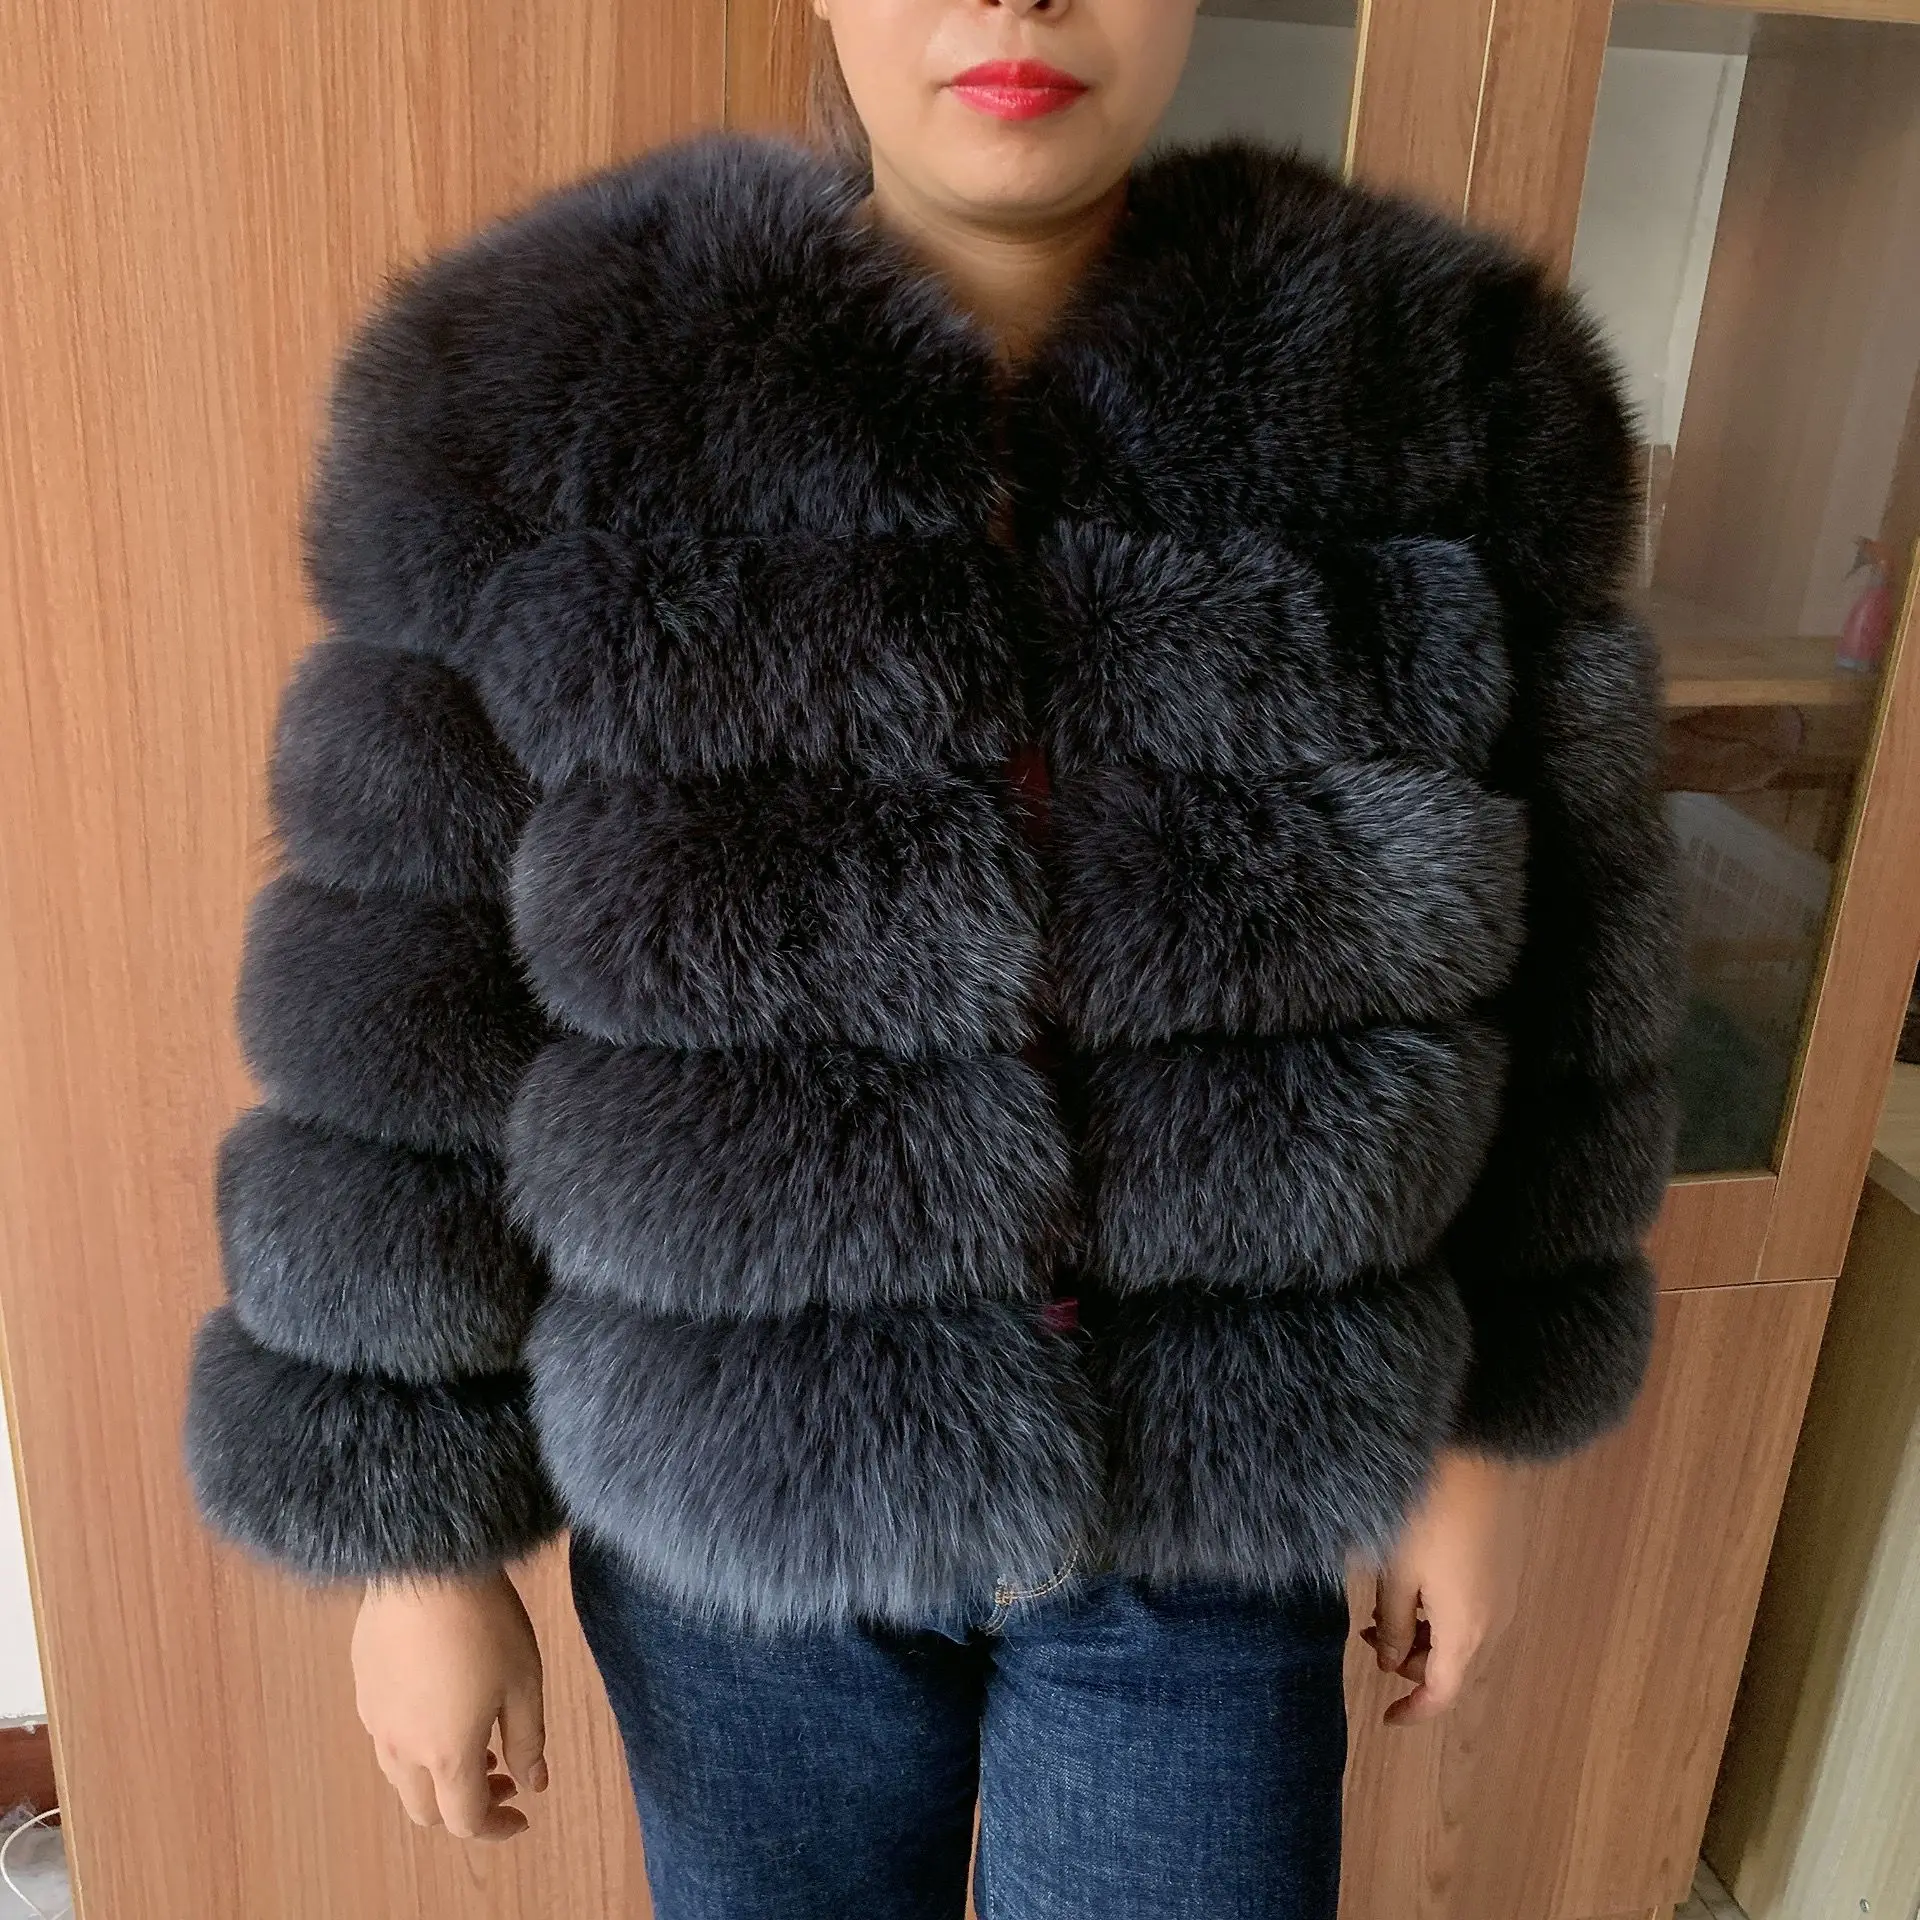 women new style real fur coat luxury winter coat jacket very warm fashion Authentic fox fur coat raccoon fur coat Free shipping enlarge